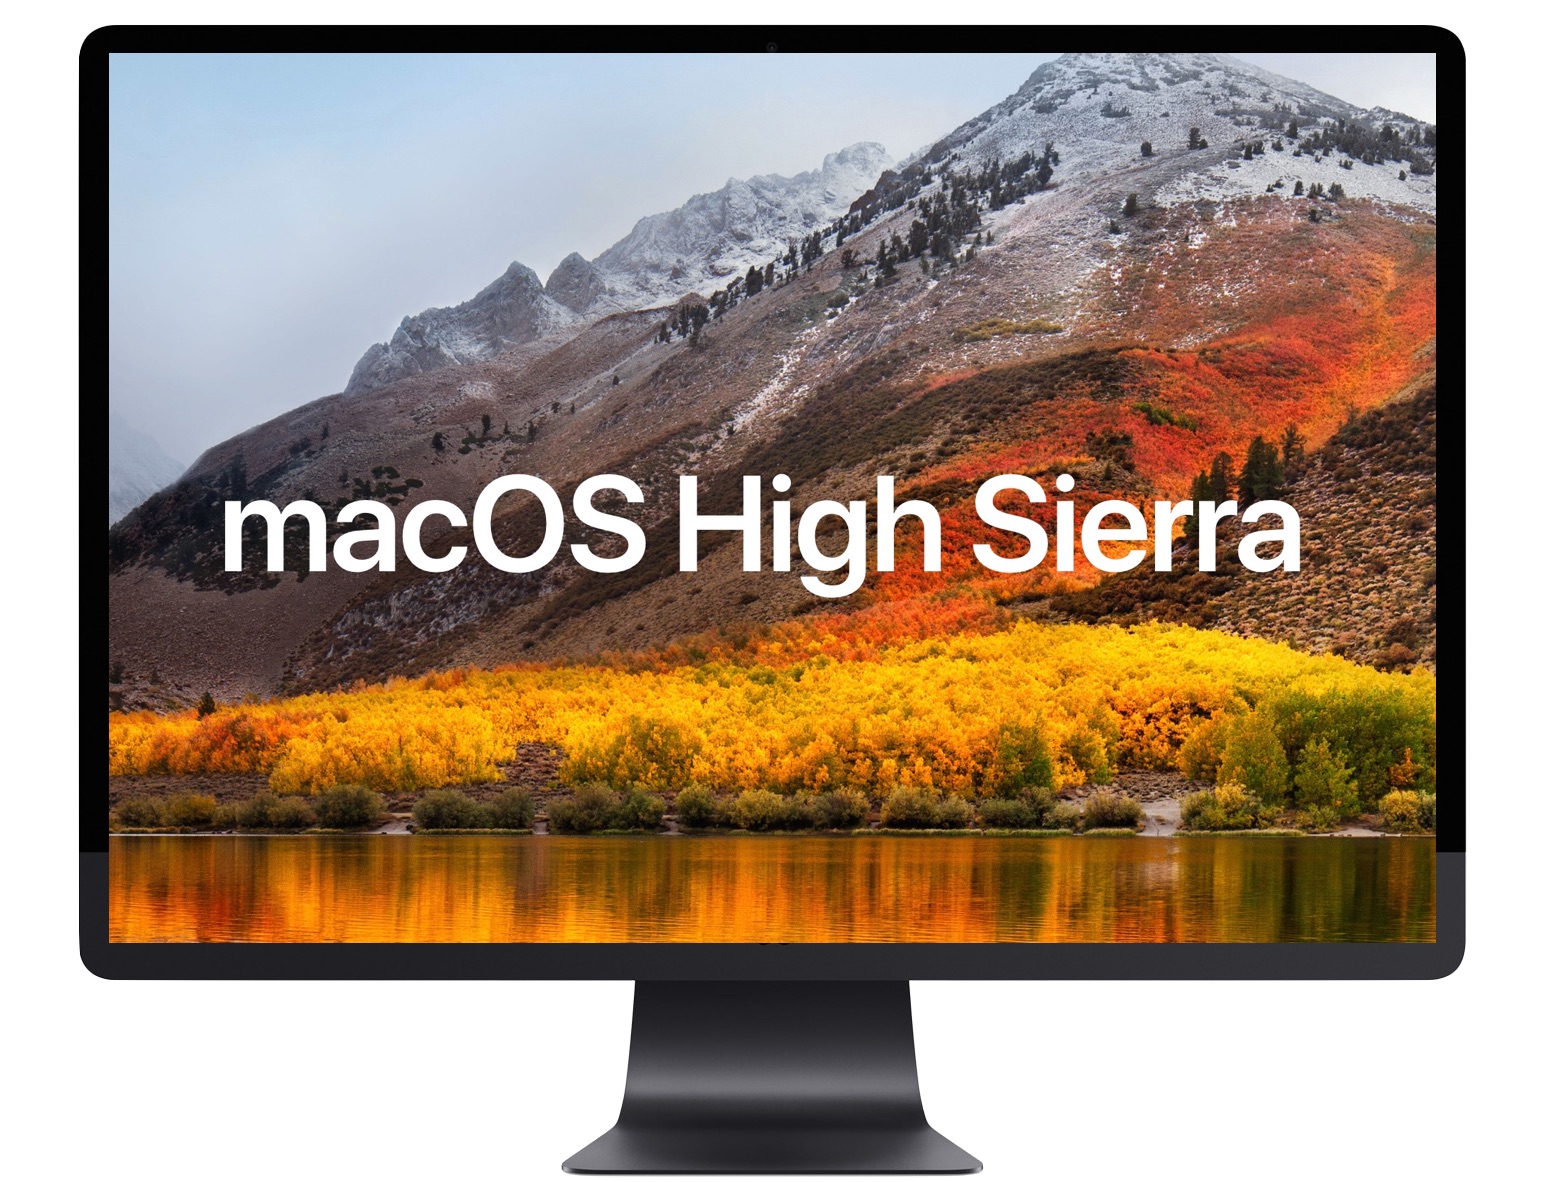 Cannot Download Mac Os High Sierra